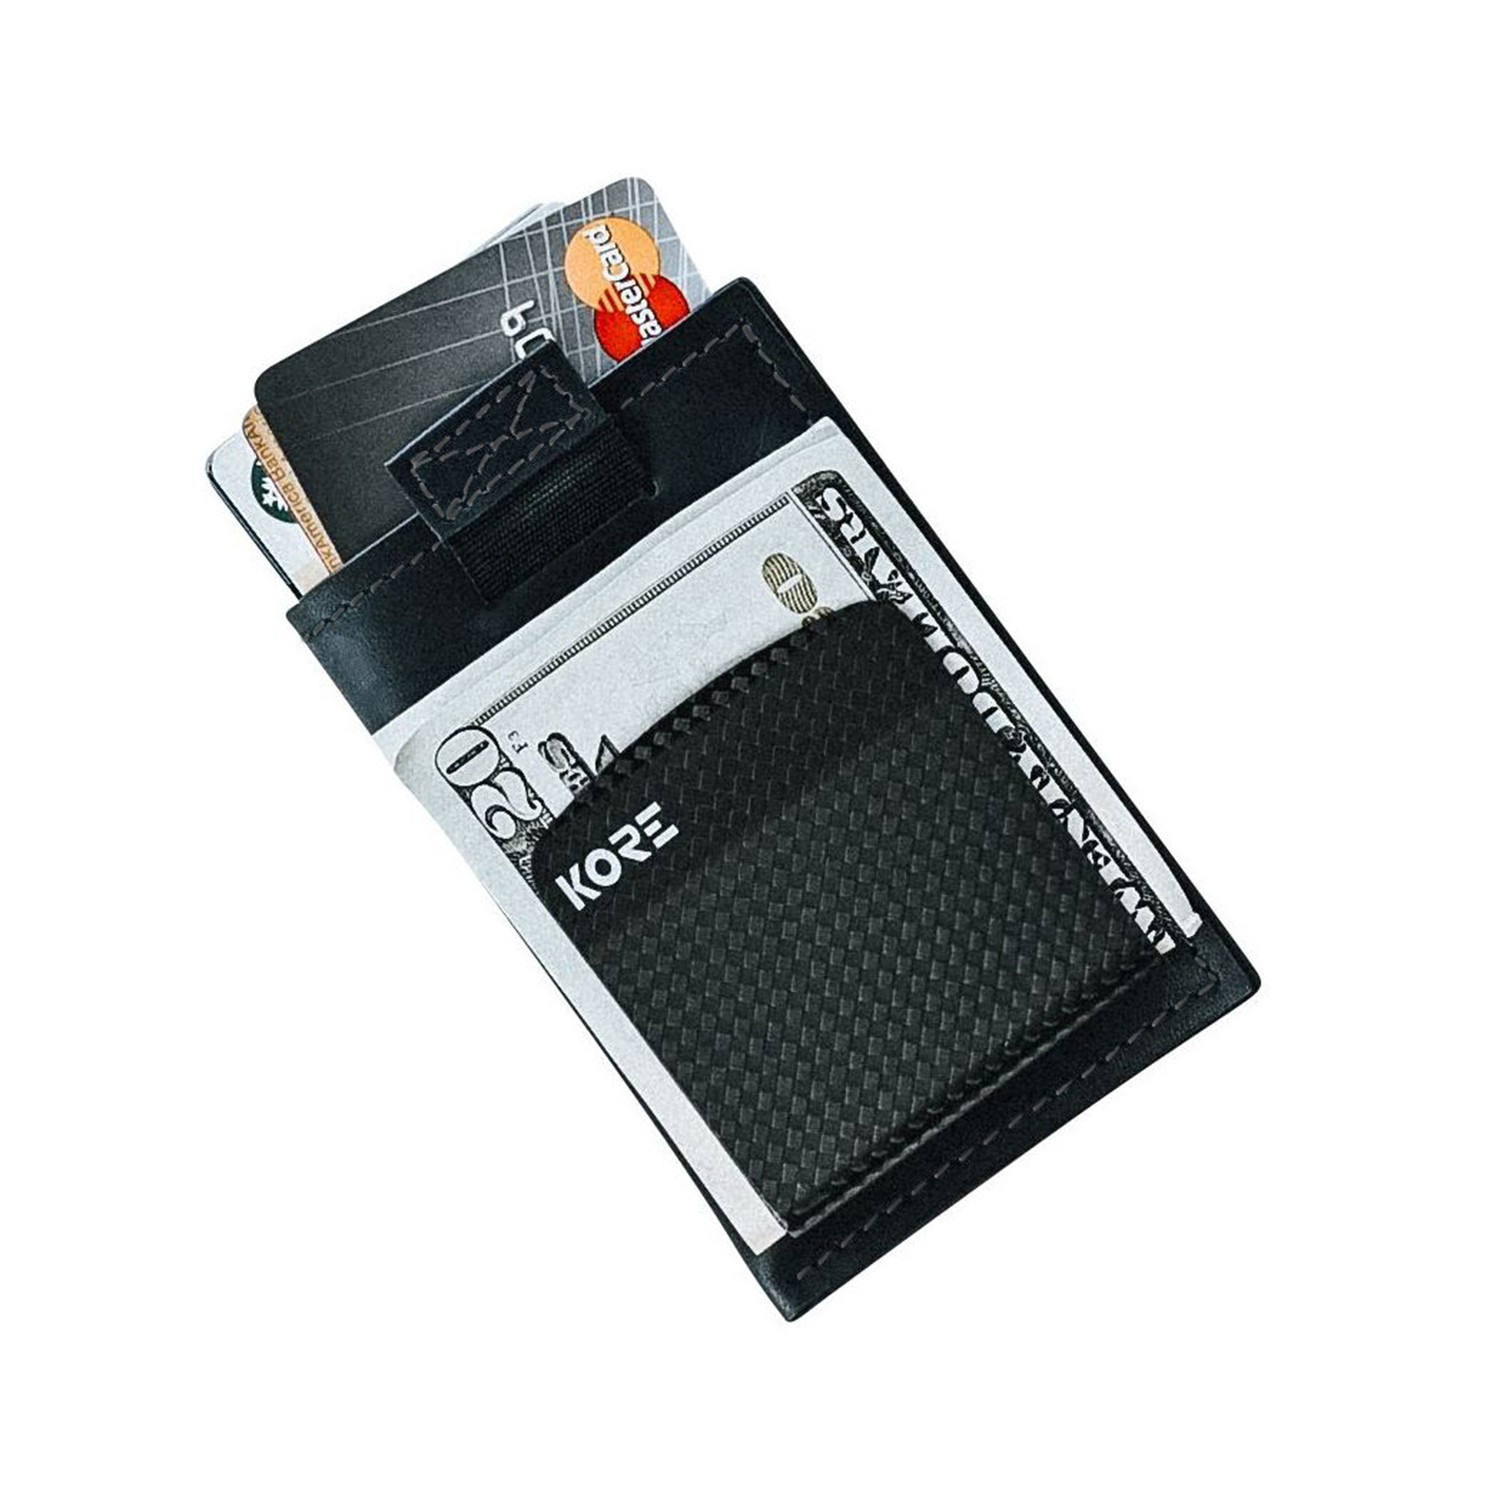 Slim RFID Wallet + Carbon Fiber Money Clip // Black - Kore Essentials ...